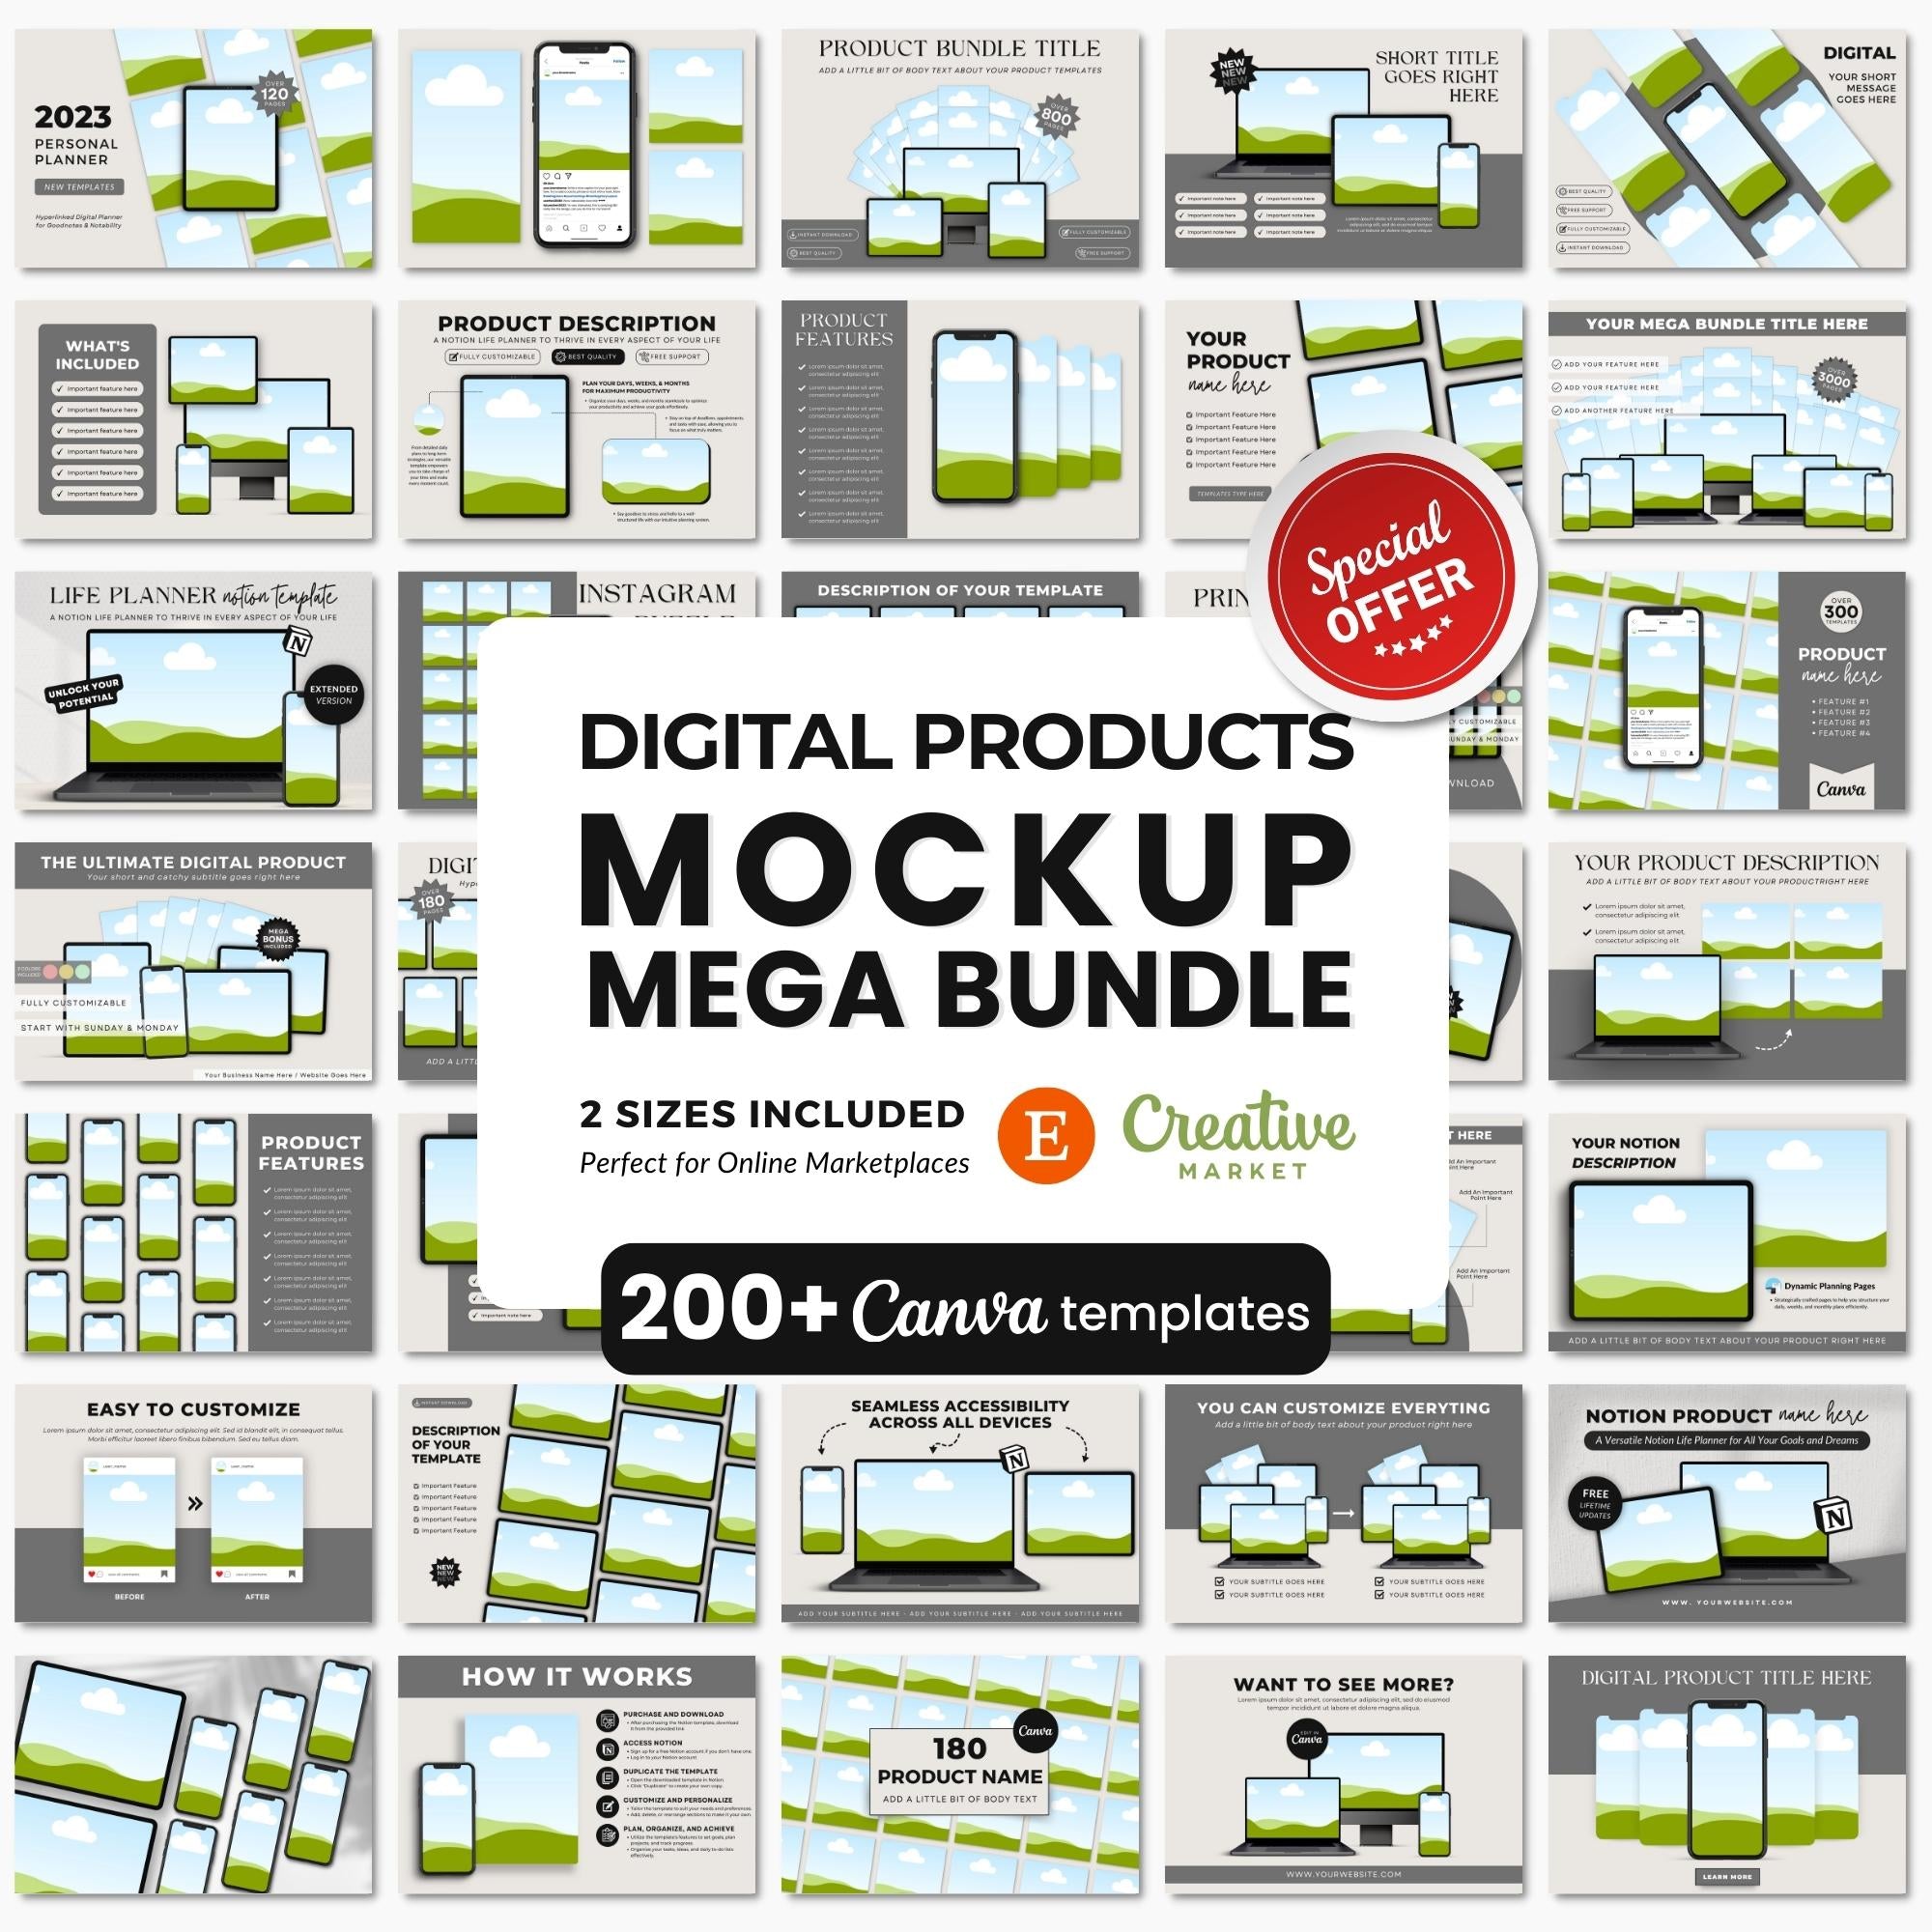 Digital Products Mockup Templates Mega Bundle DigiPax